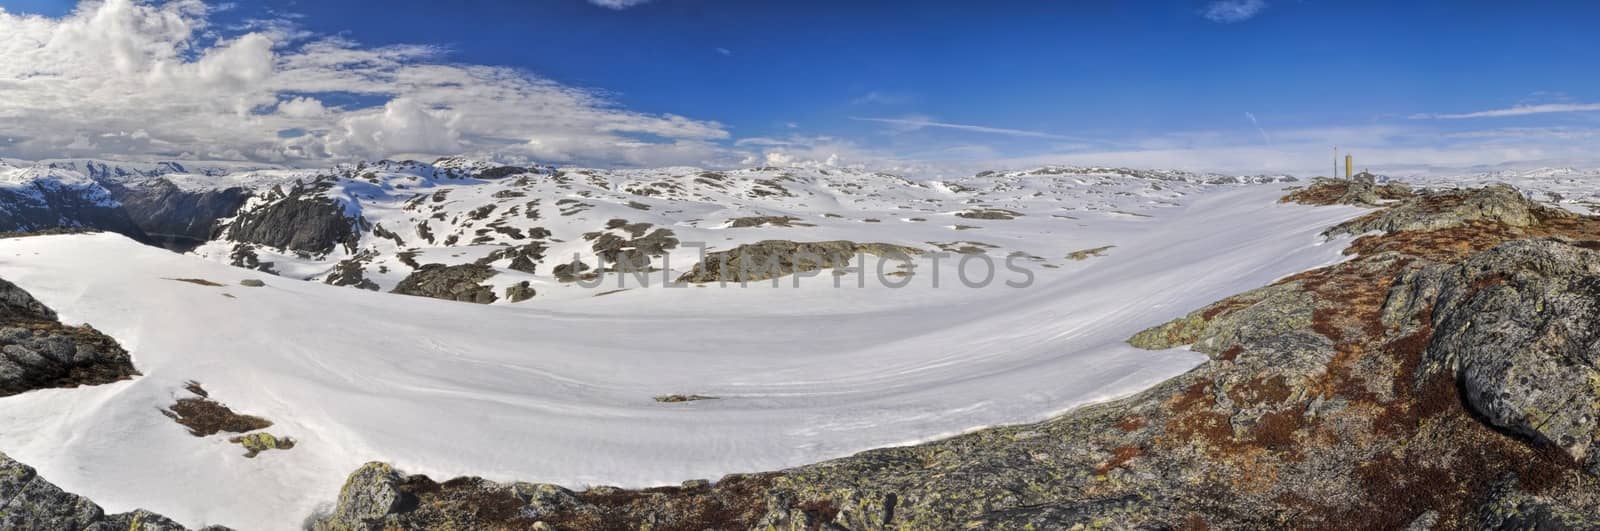 Trolltunga, Norway  by MichalKnitl